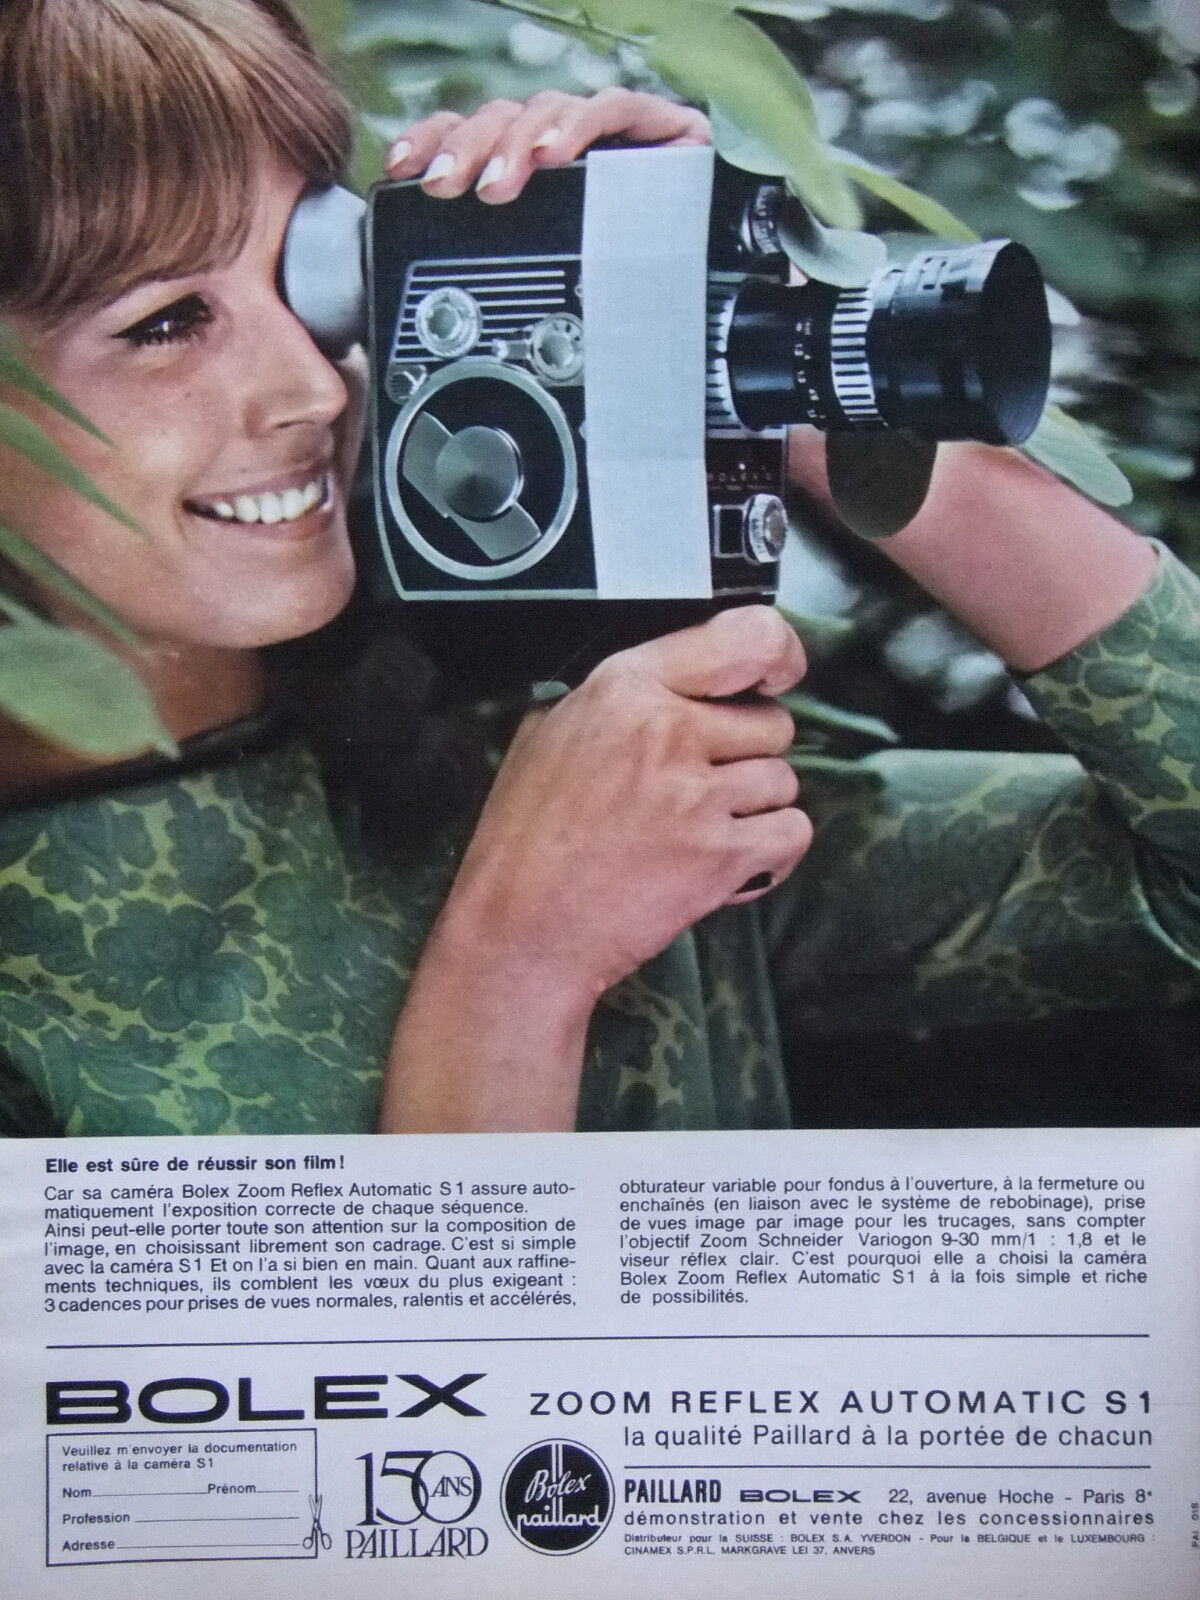 1964 BOLEX ZOOM REFLEX AUTOMATIC S1 PRESS ADVERTISEMENT - ADVERTISING